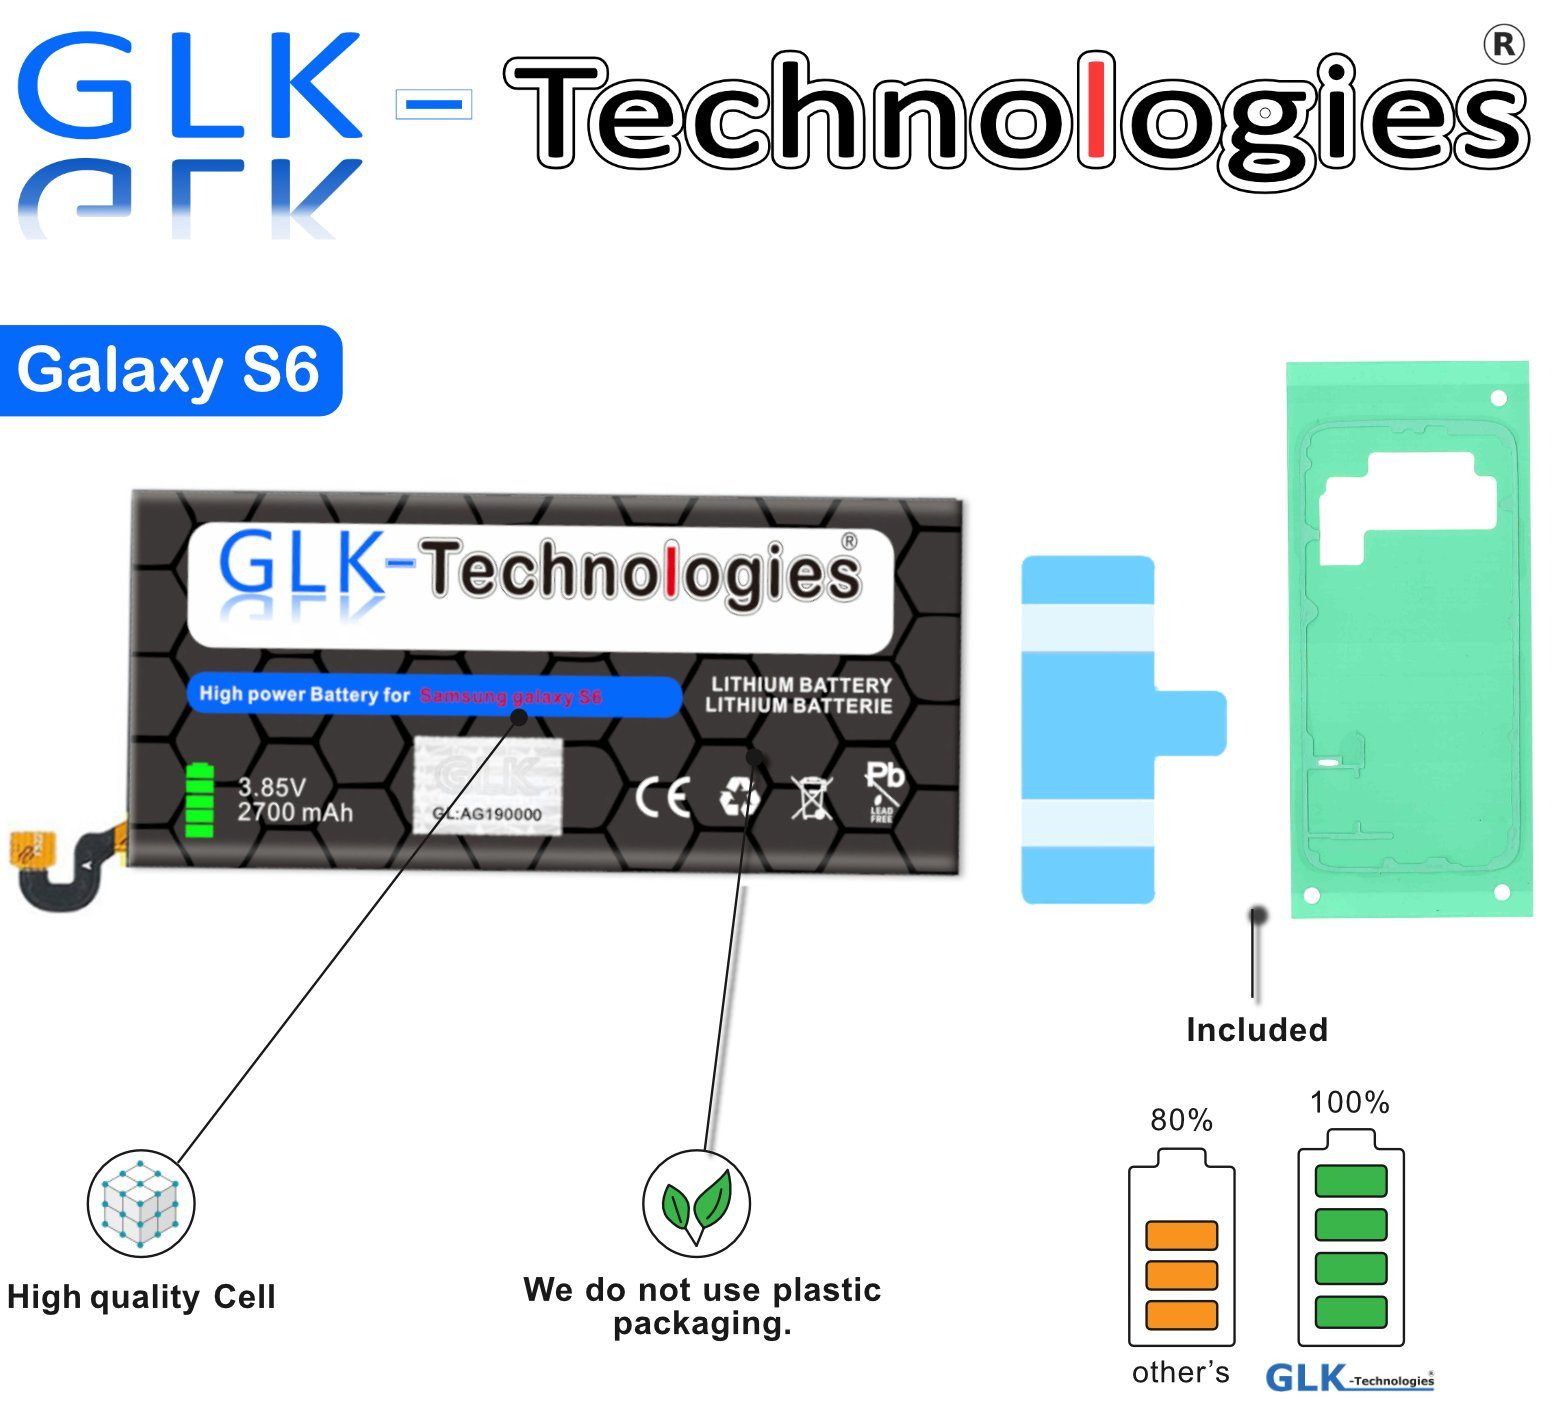 GLK-Technologies High-Capacity Ersatzakku kompatibel mit Samsung Galaxy S6 SM-G920F / EB-BG920ABE, Original GLK-Technologies Battery, accu, 2700 mAh Akku, inkl. 2X Klebebandsätze NEU Smartphone-Akku 2700 mAh (3.85 V)